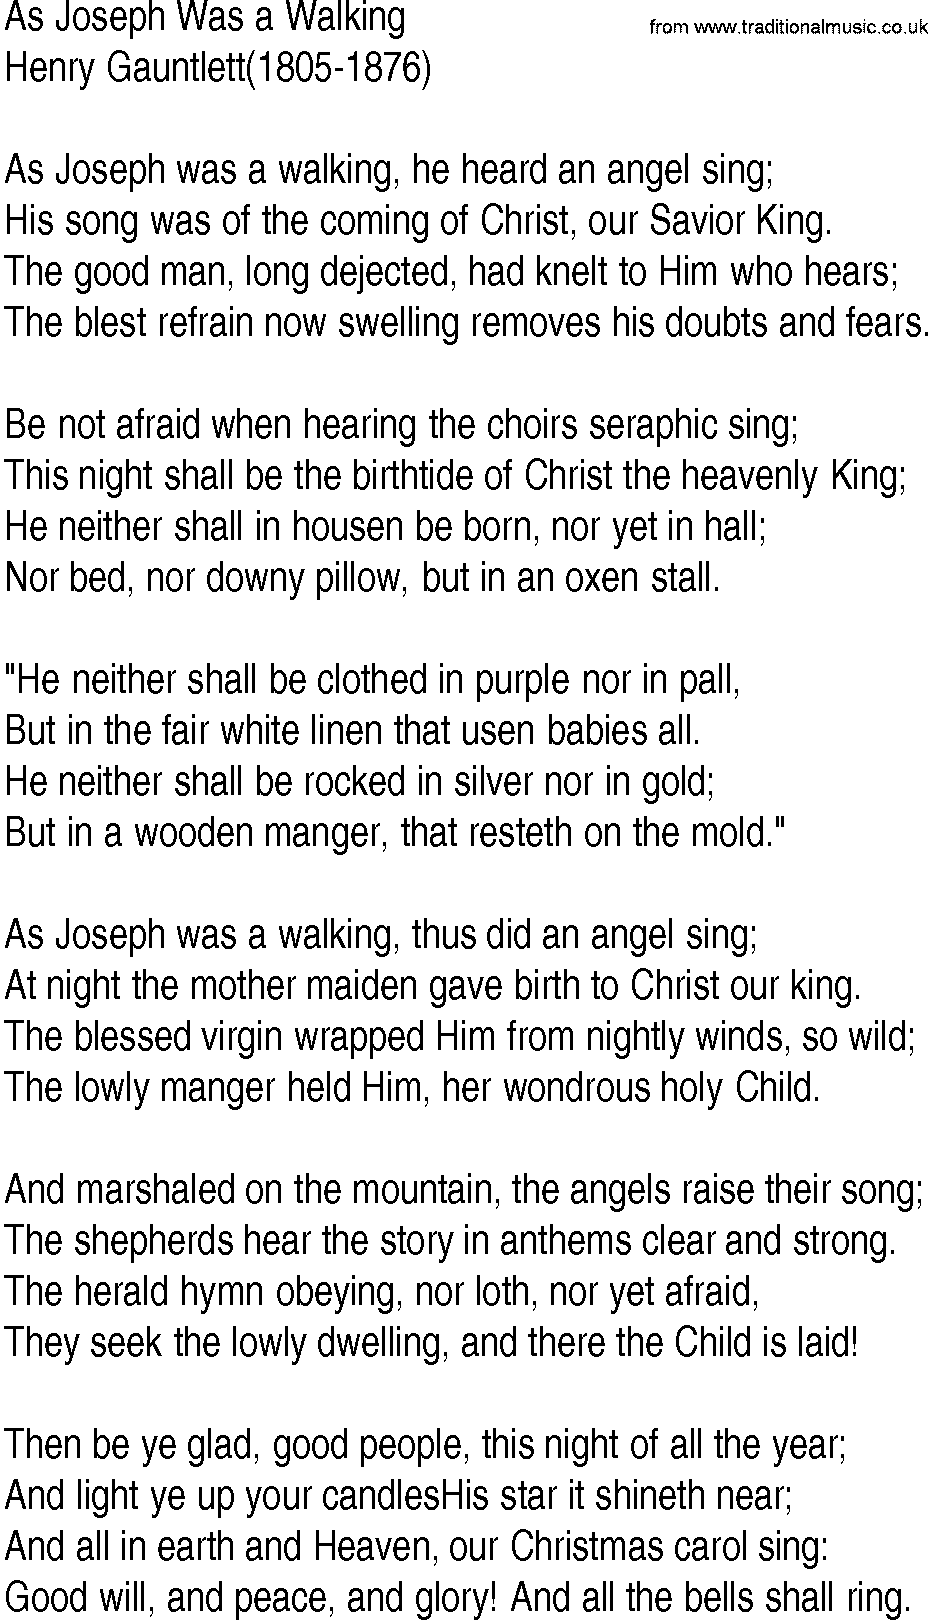 Hymn and Gospel Song: As Joseph Was a Walking by Henry Gauntlett lyrics